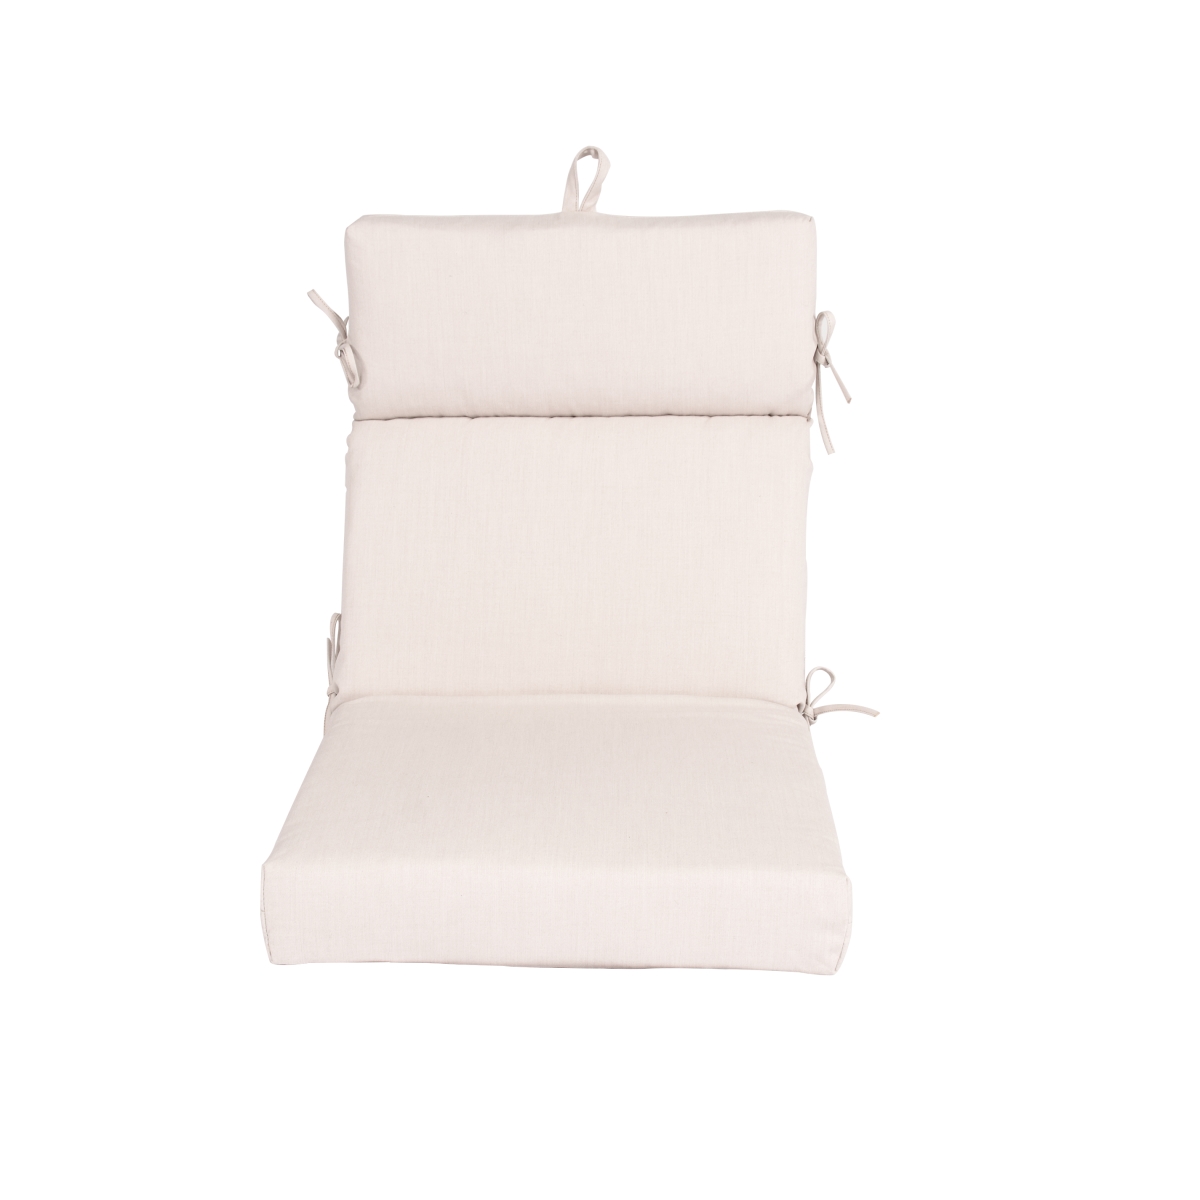 Cudc44-sda53 44 X 21 In. Pacifica Premium Patio Dining Chair Cushion In Sand